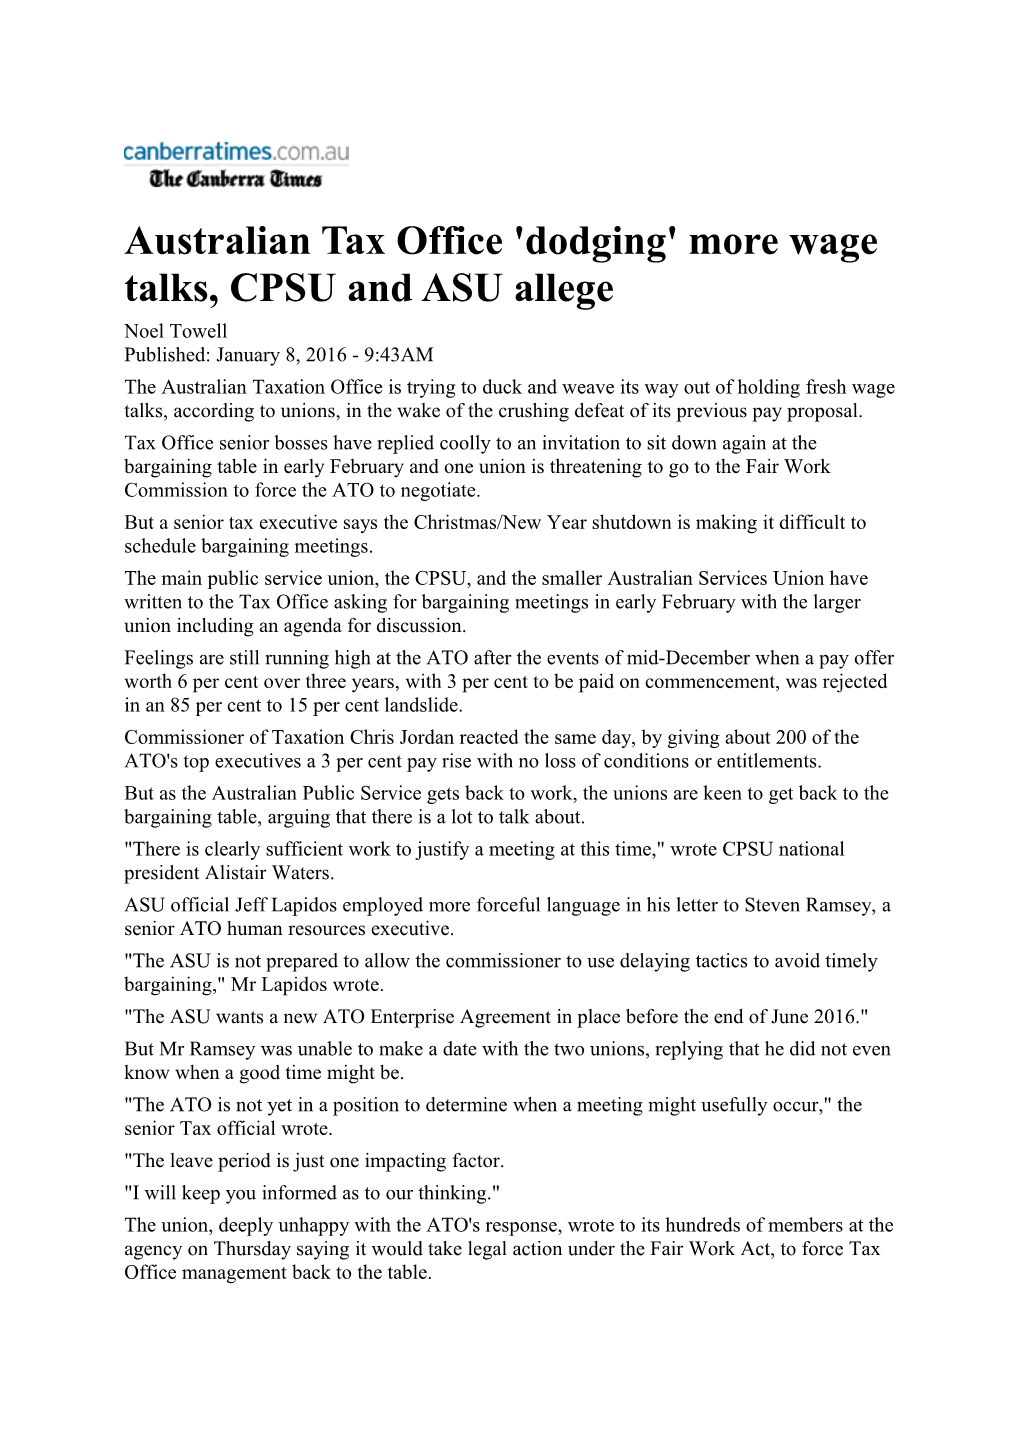 Australian Tax Office 'Dodging' More Wage Talks, CPSU and ASU Allege